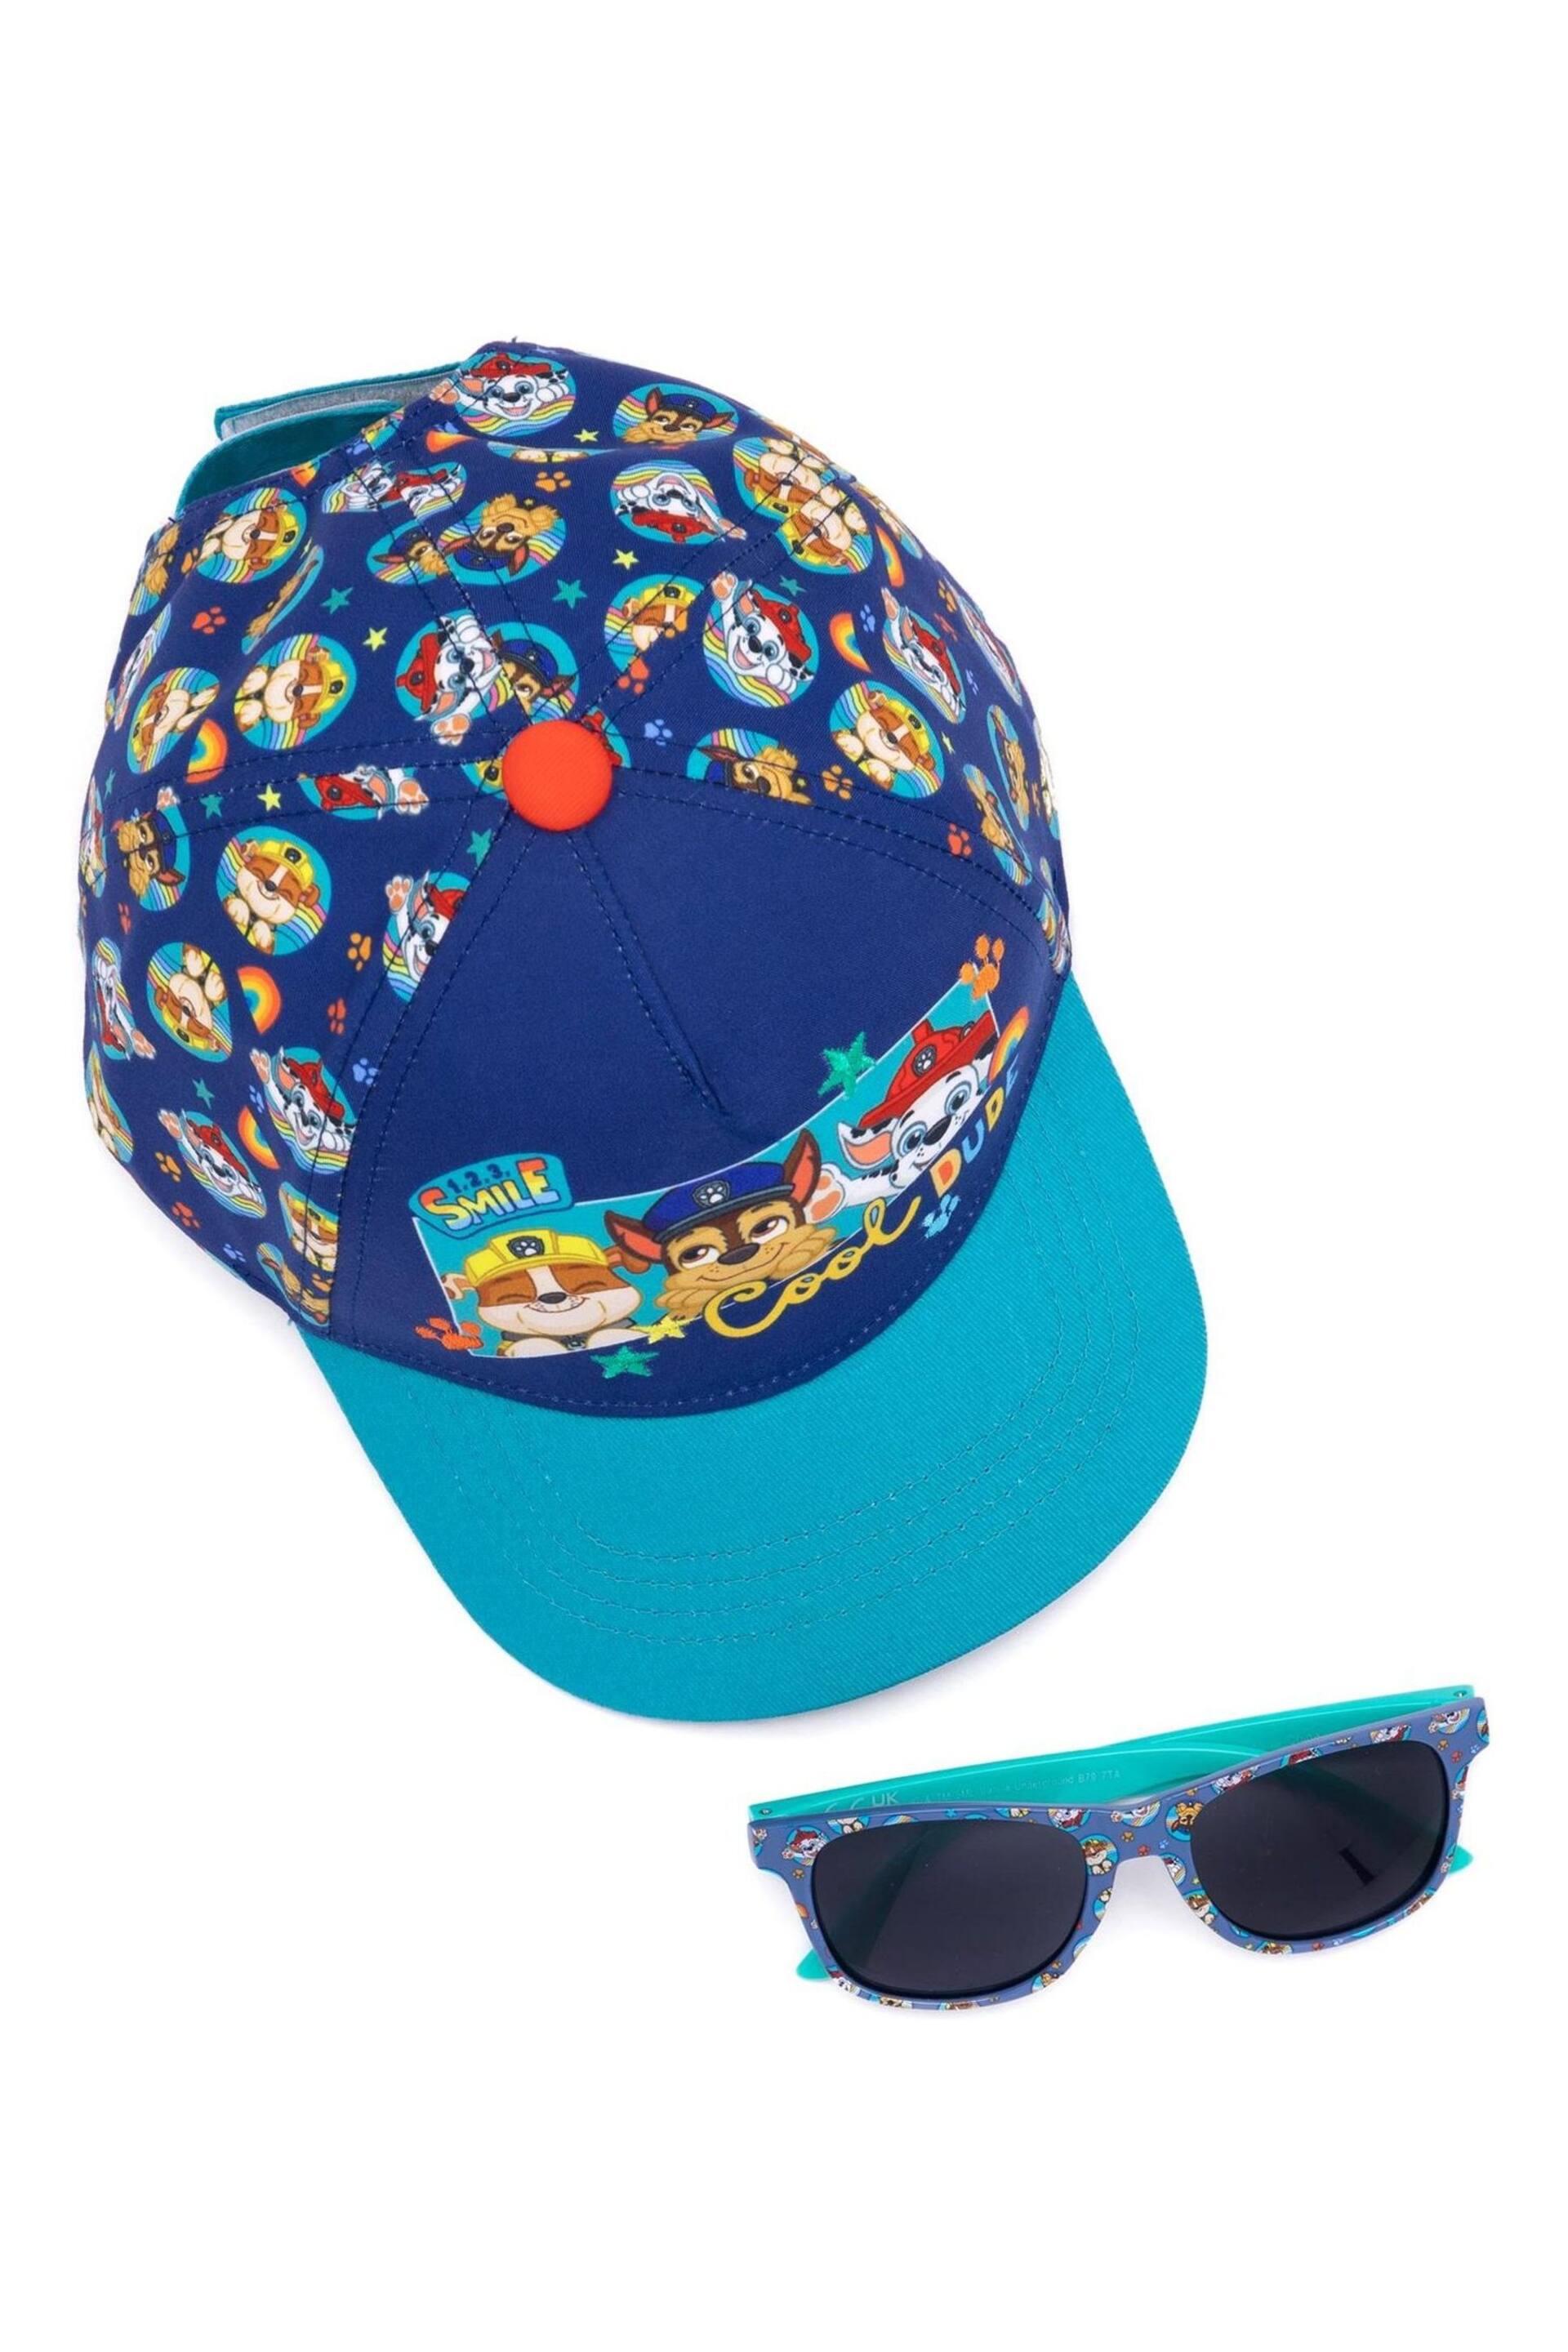 Vanilla Underground Blue Kids Paw Patrol Cap with Sunglasses - Image 2 of 4